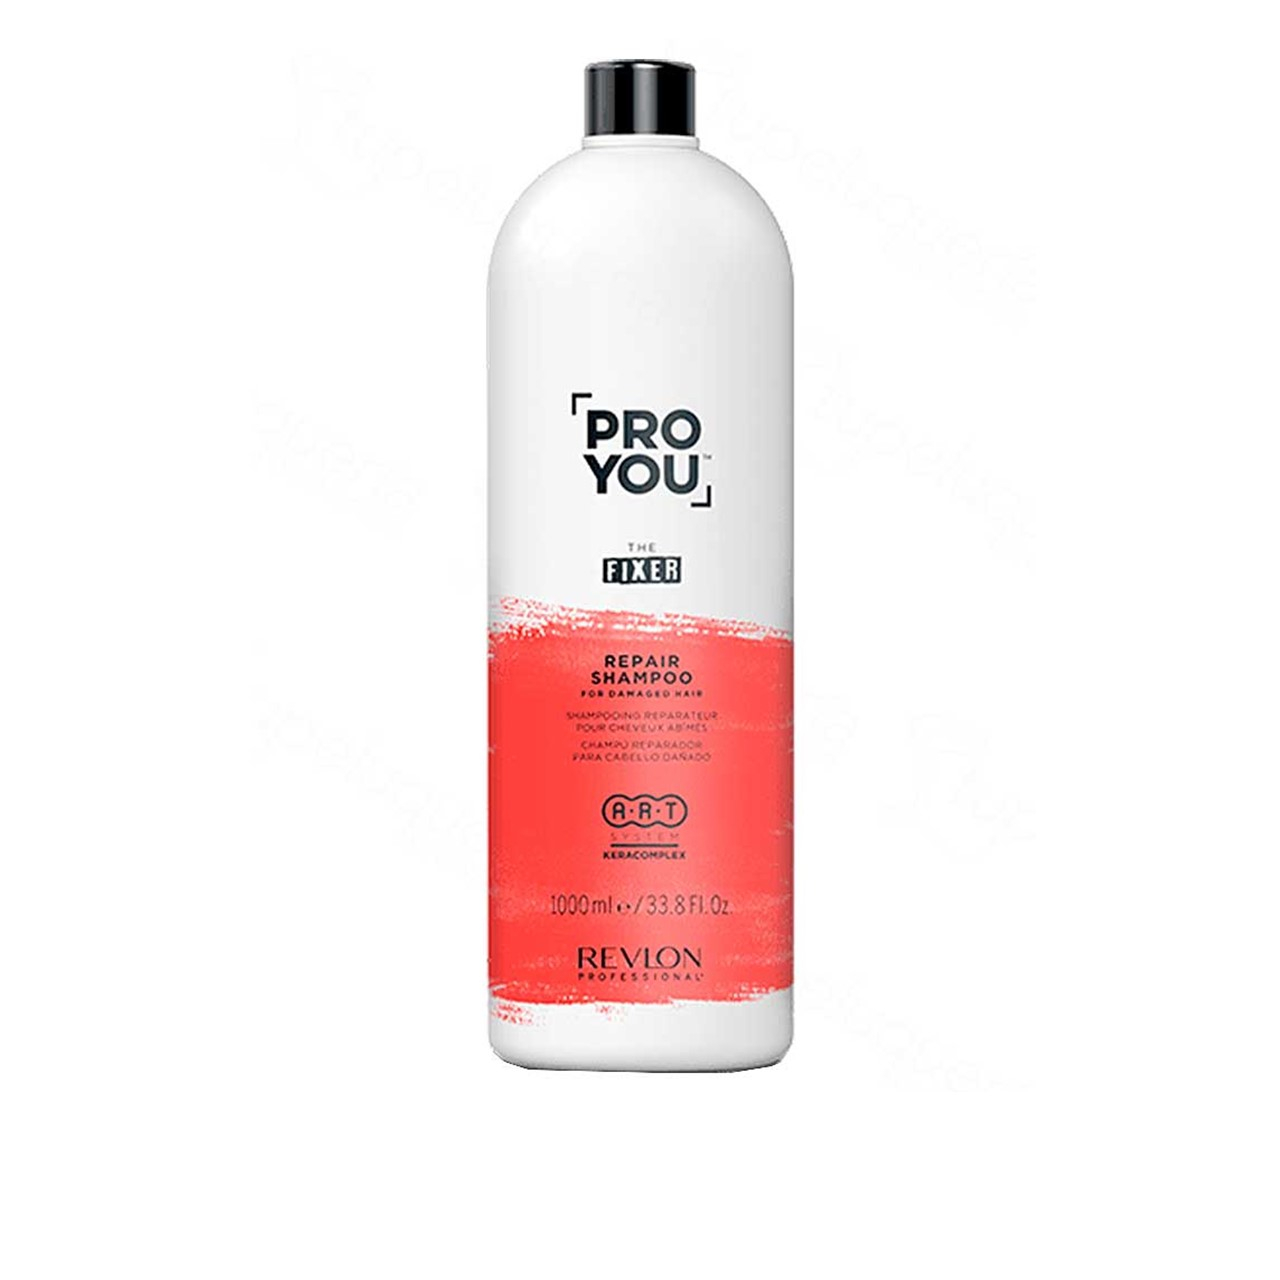 Revlon Professional Pro You The Fixer Repair Shampoo 1L